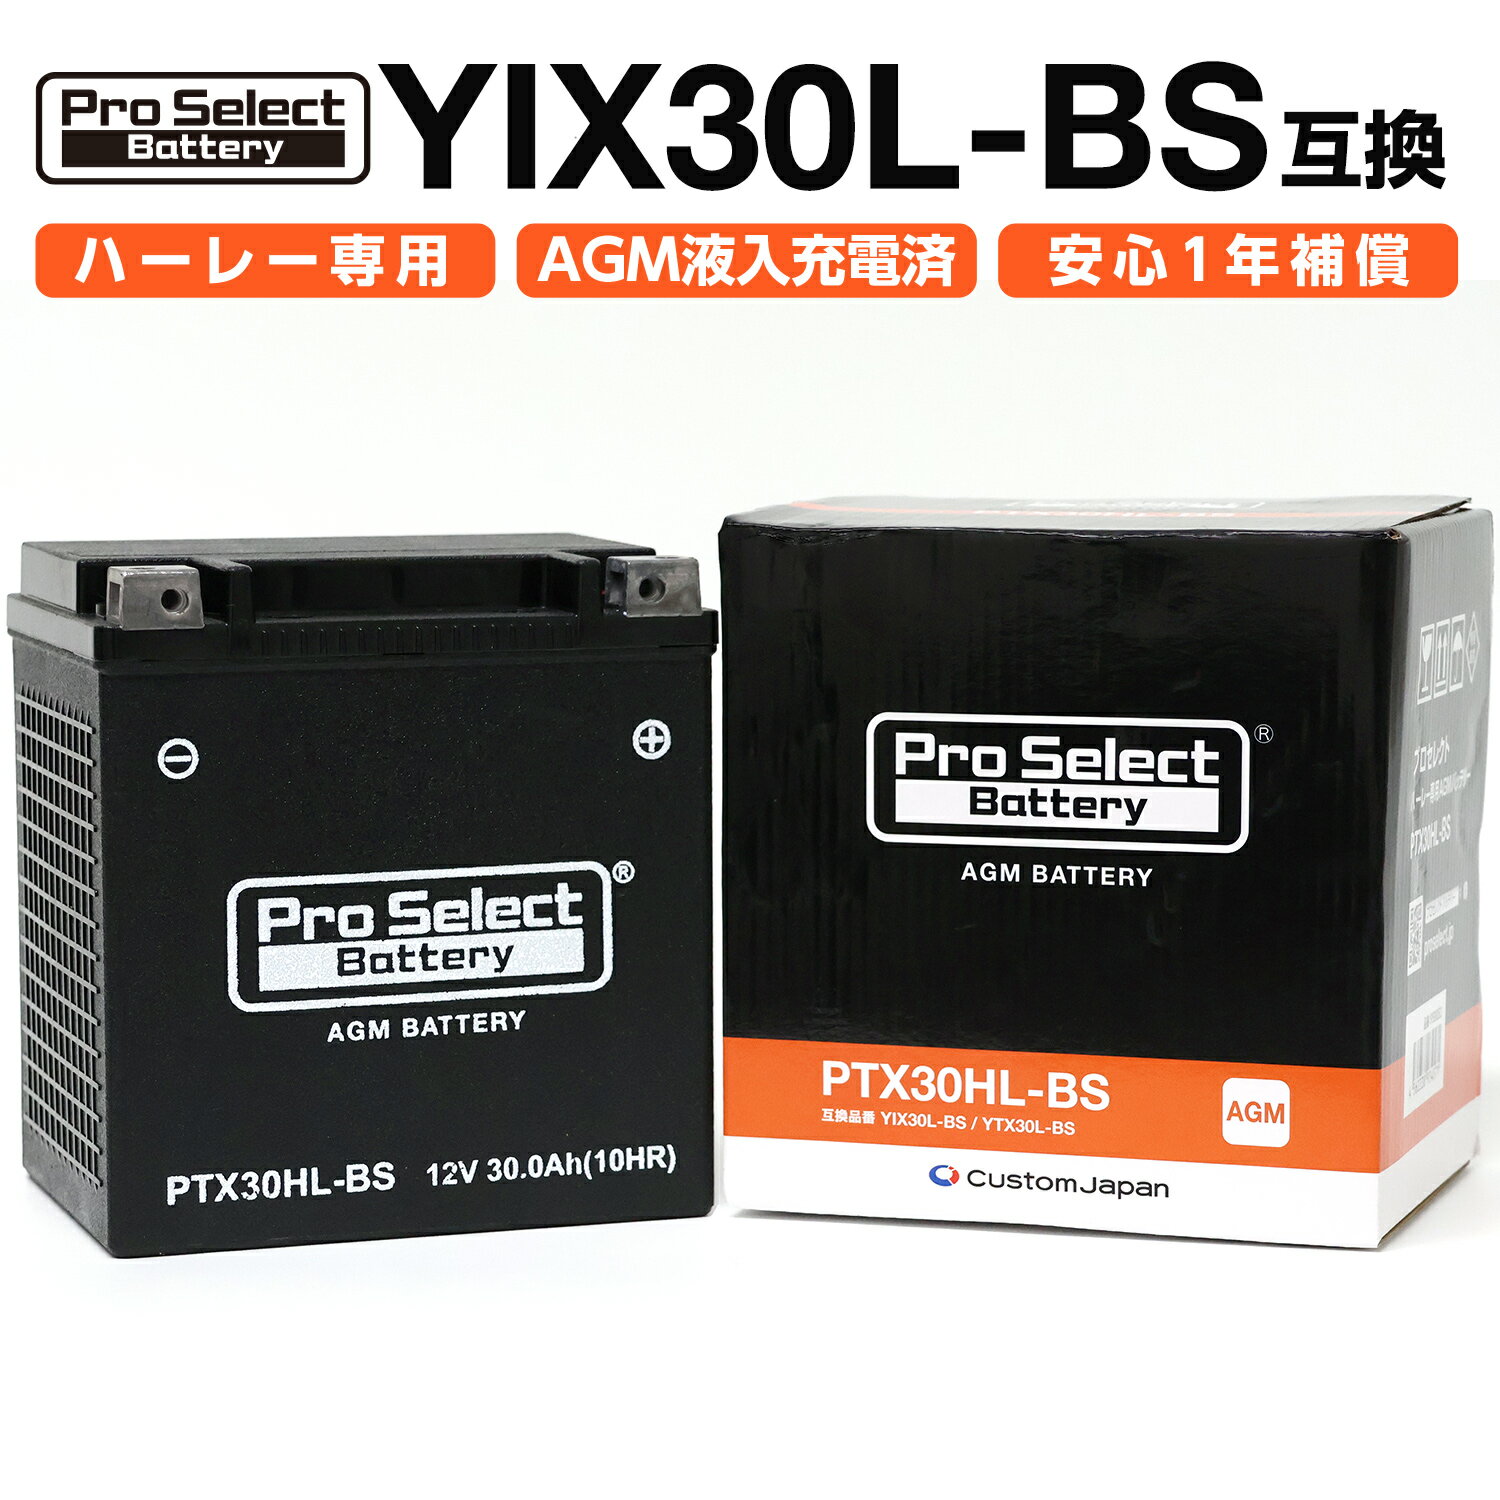 ProSelect(プロセレクト) バイク PTX30HL-BS ハーレー専用AGMバッテリー(YIX30L-BS/YTX30L-BS互換) PSB053 密閉型MFバッテリー